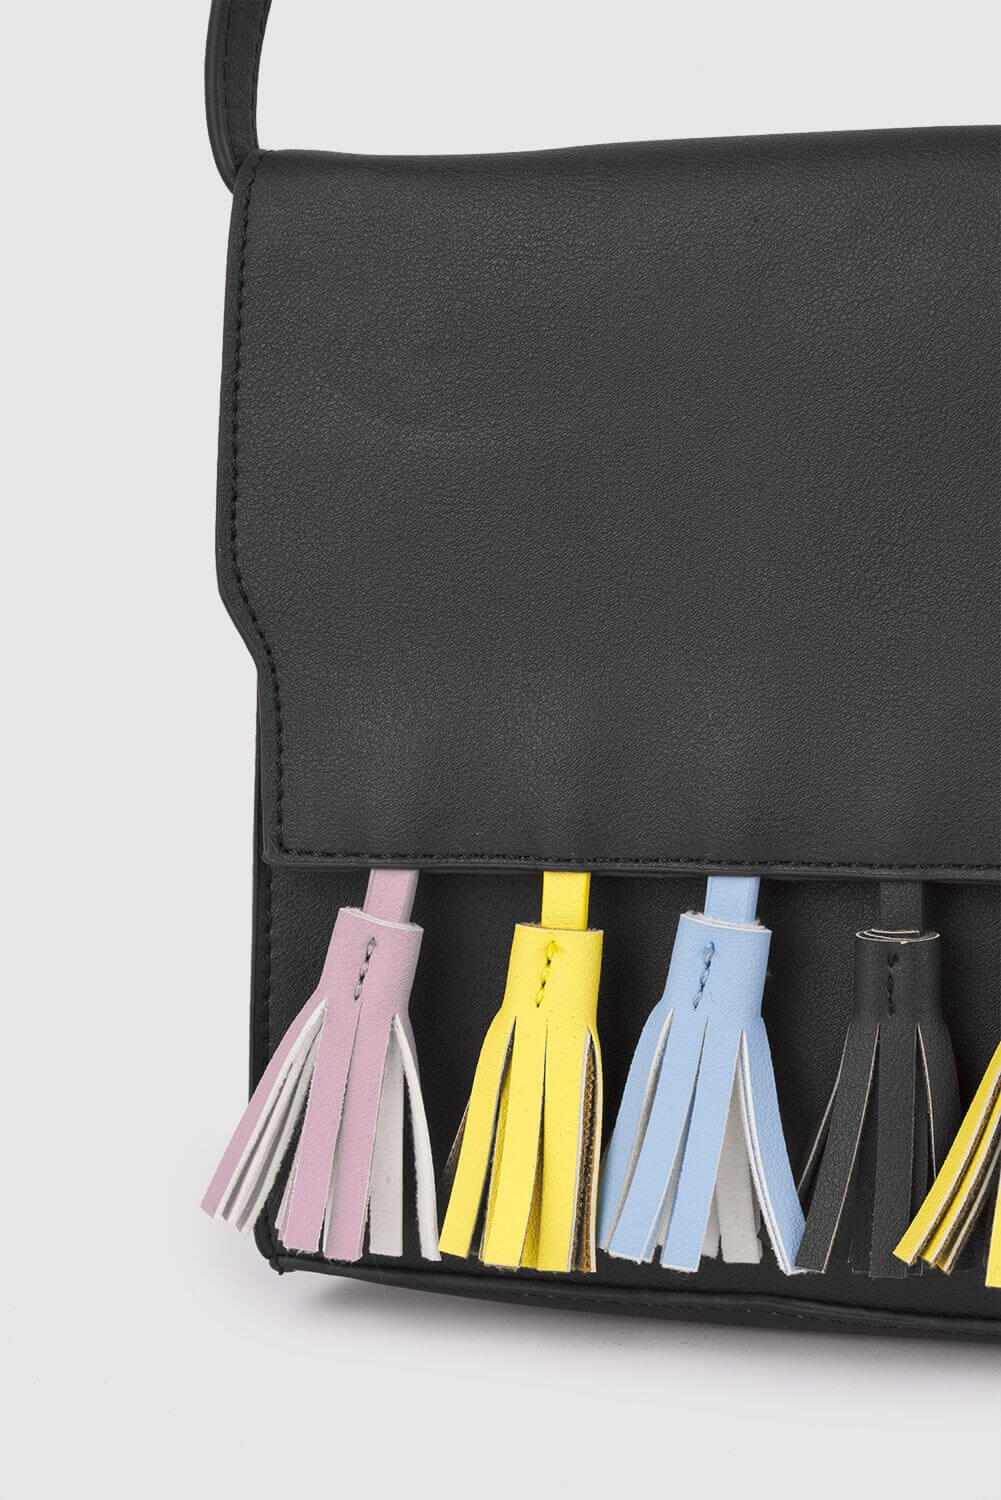 Avelino Faux Leather Cross Body Adjustable Strap Multi-Coloured Tassel Bag in Black